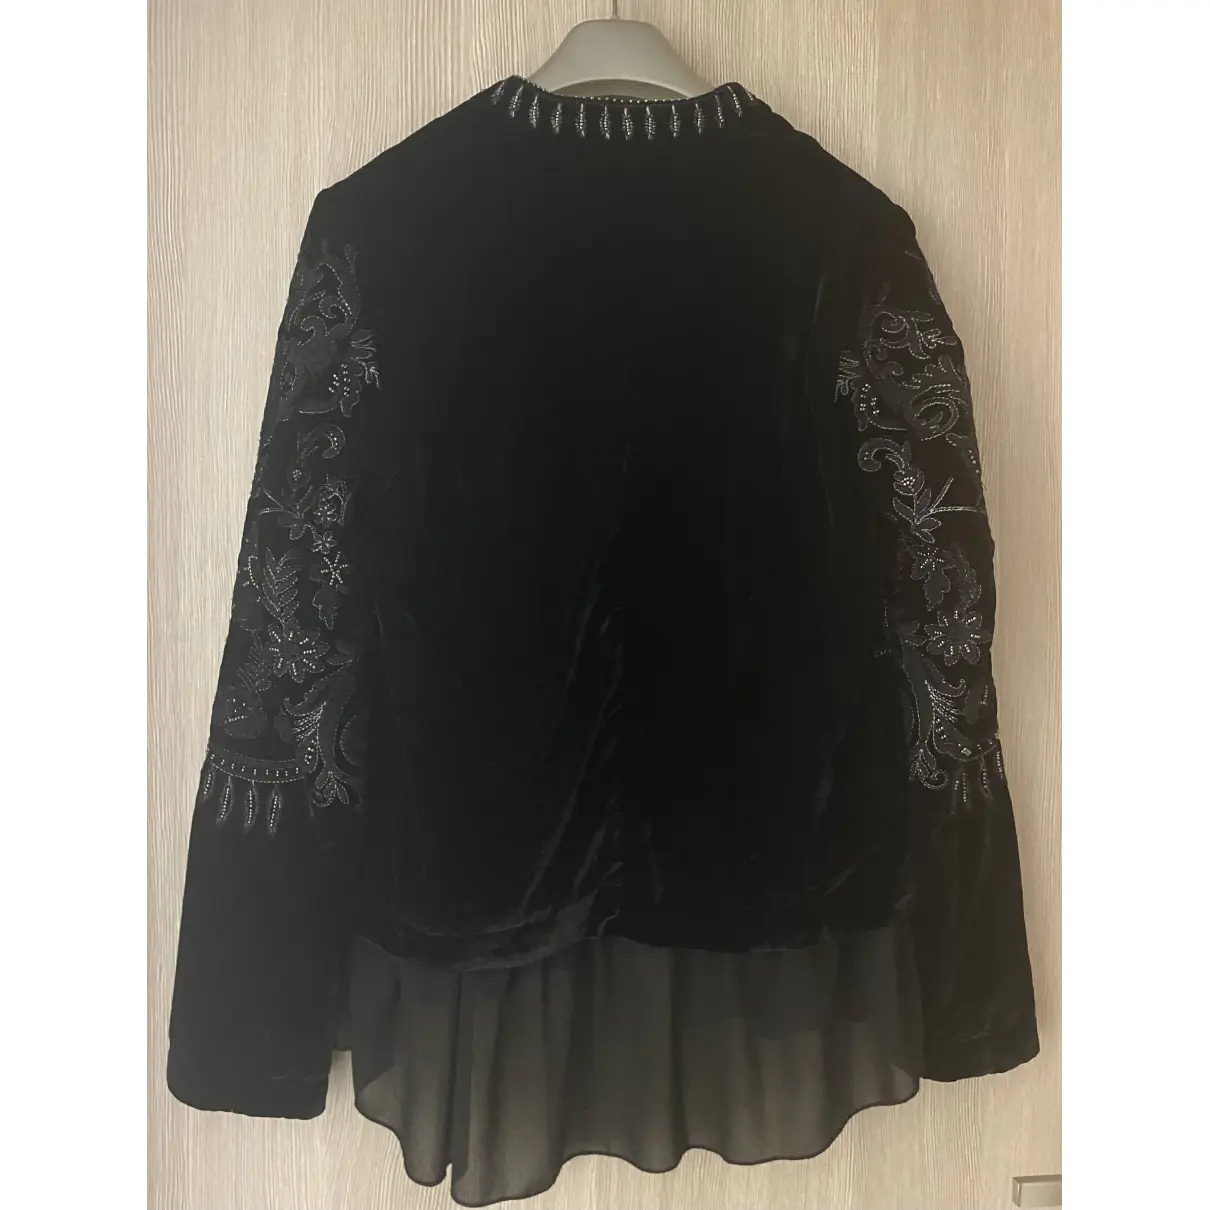 Buy Zara Black Polyester Top online